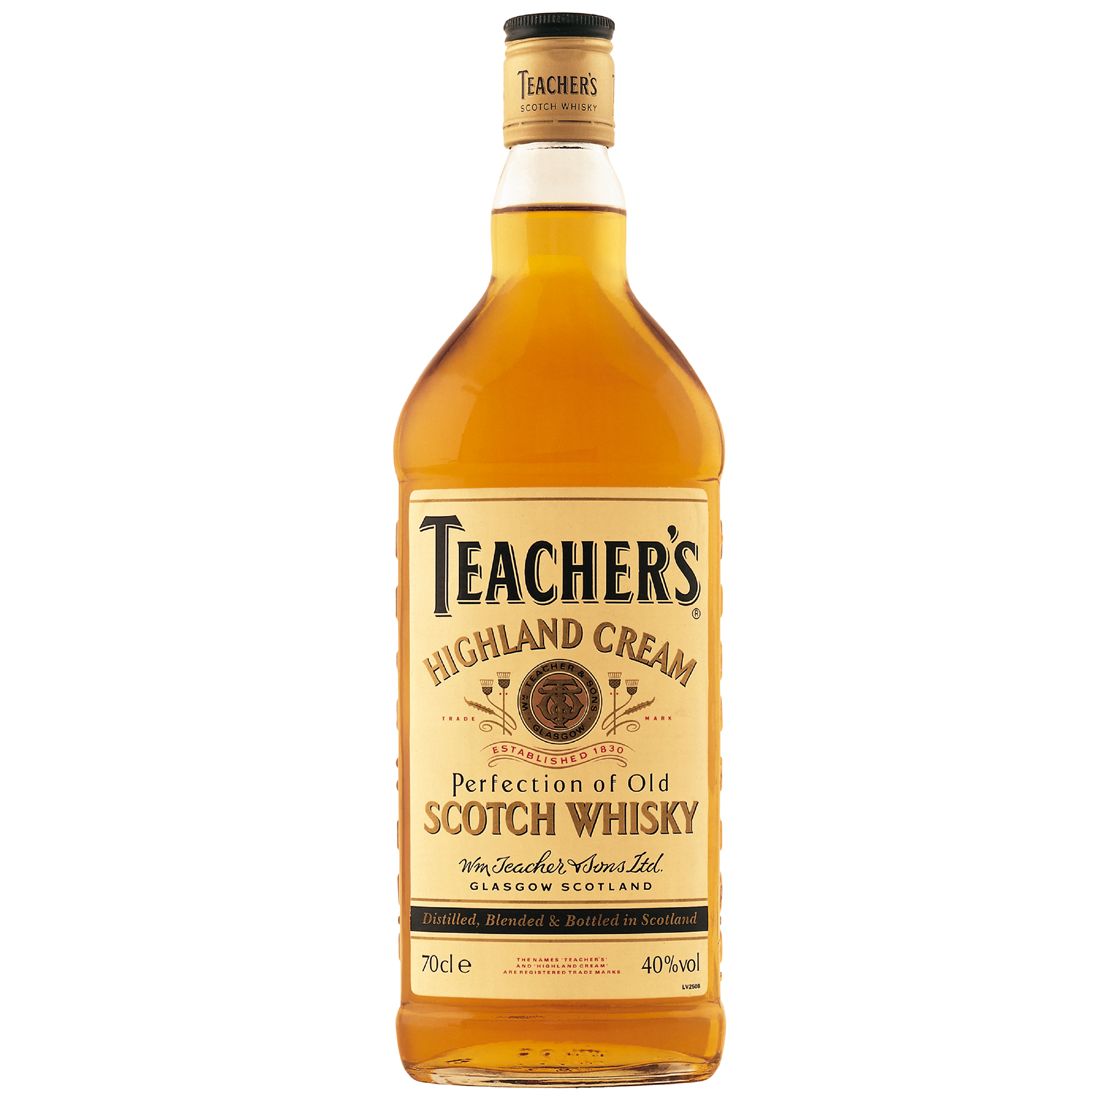 Teacher's Highland Cream Whisky at John Lewis